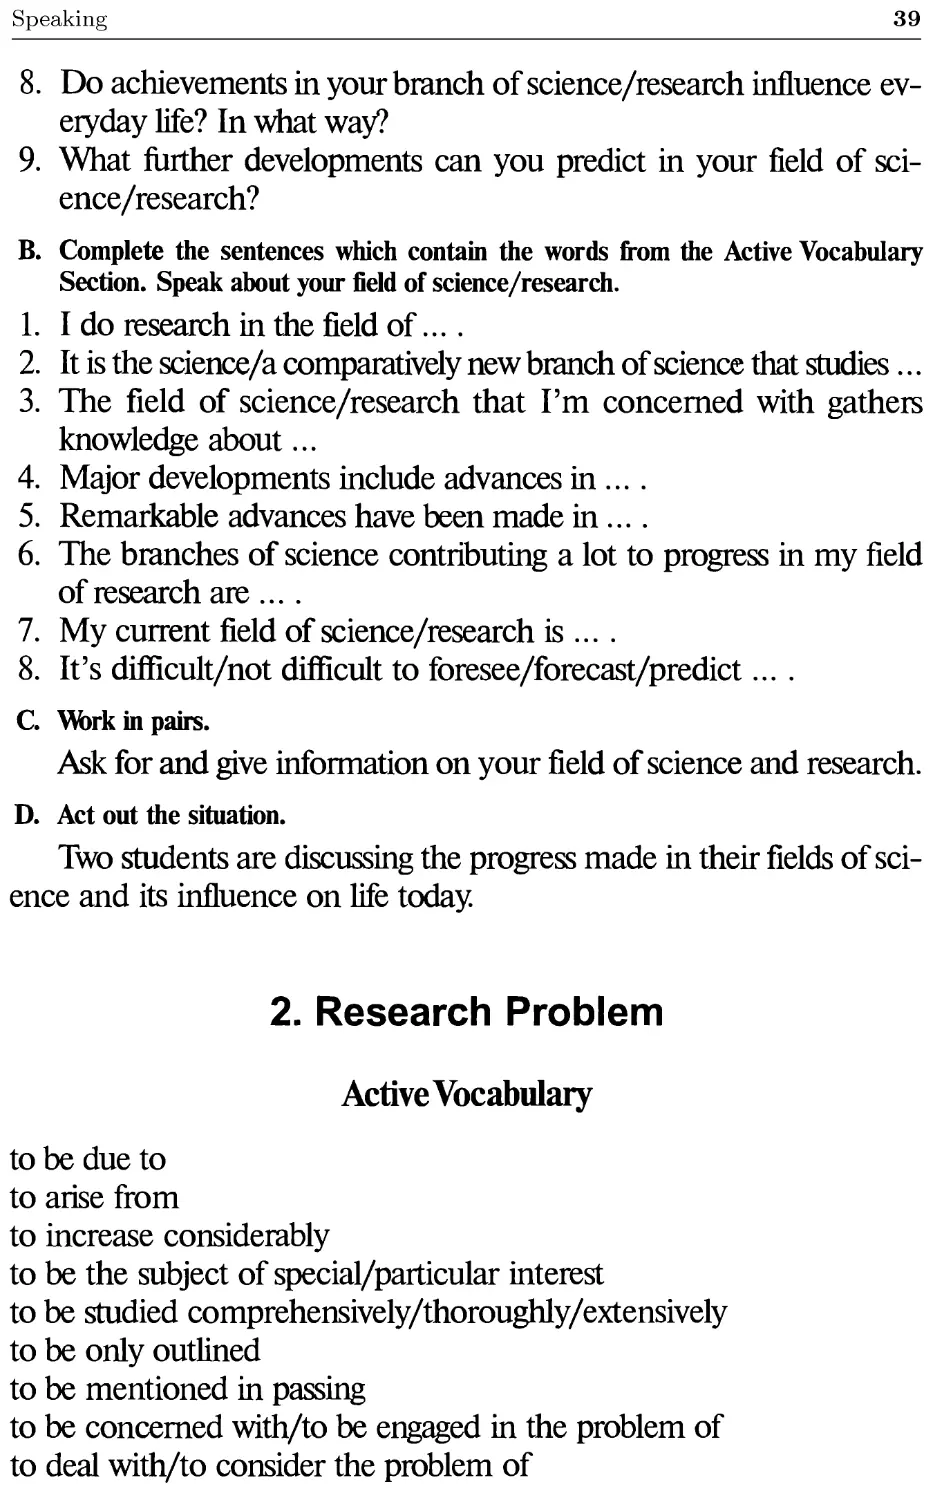 2. Research Problem